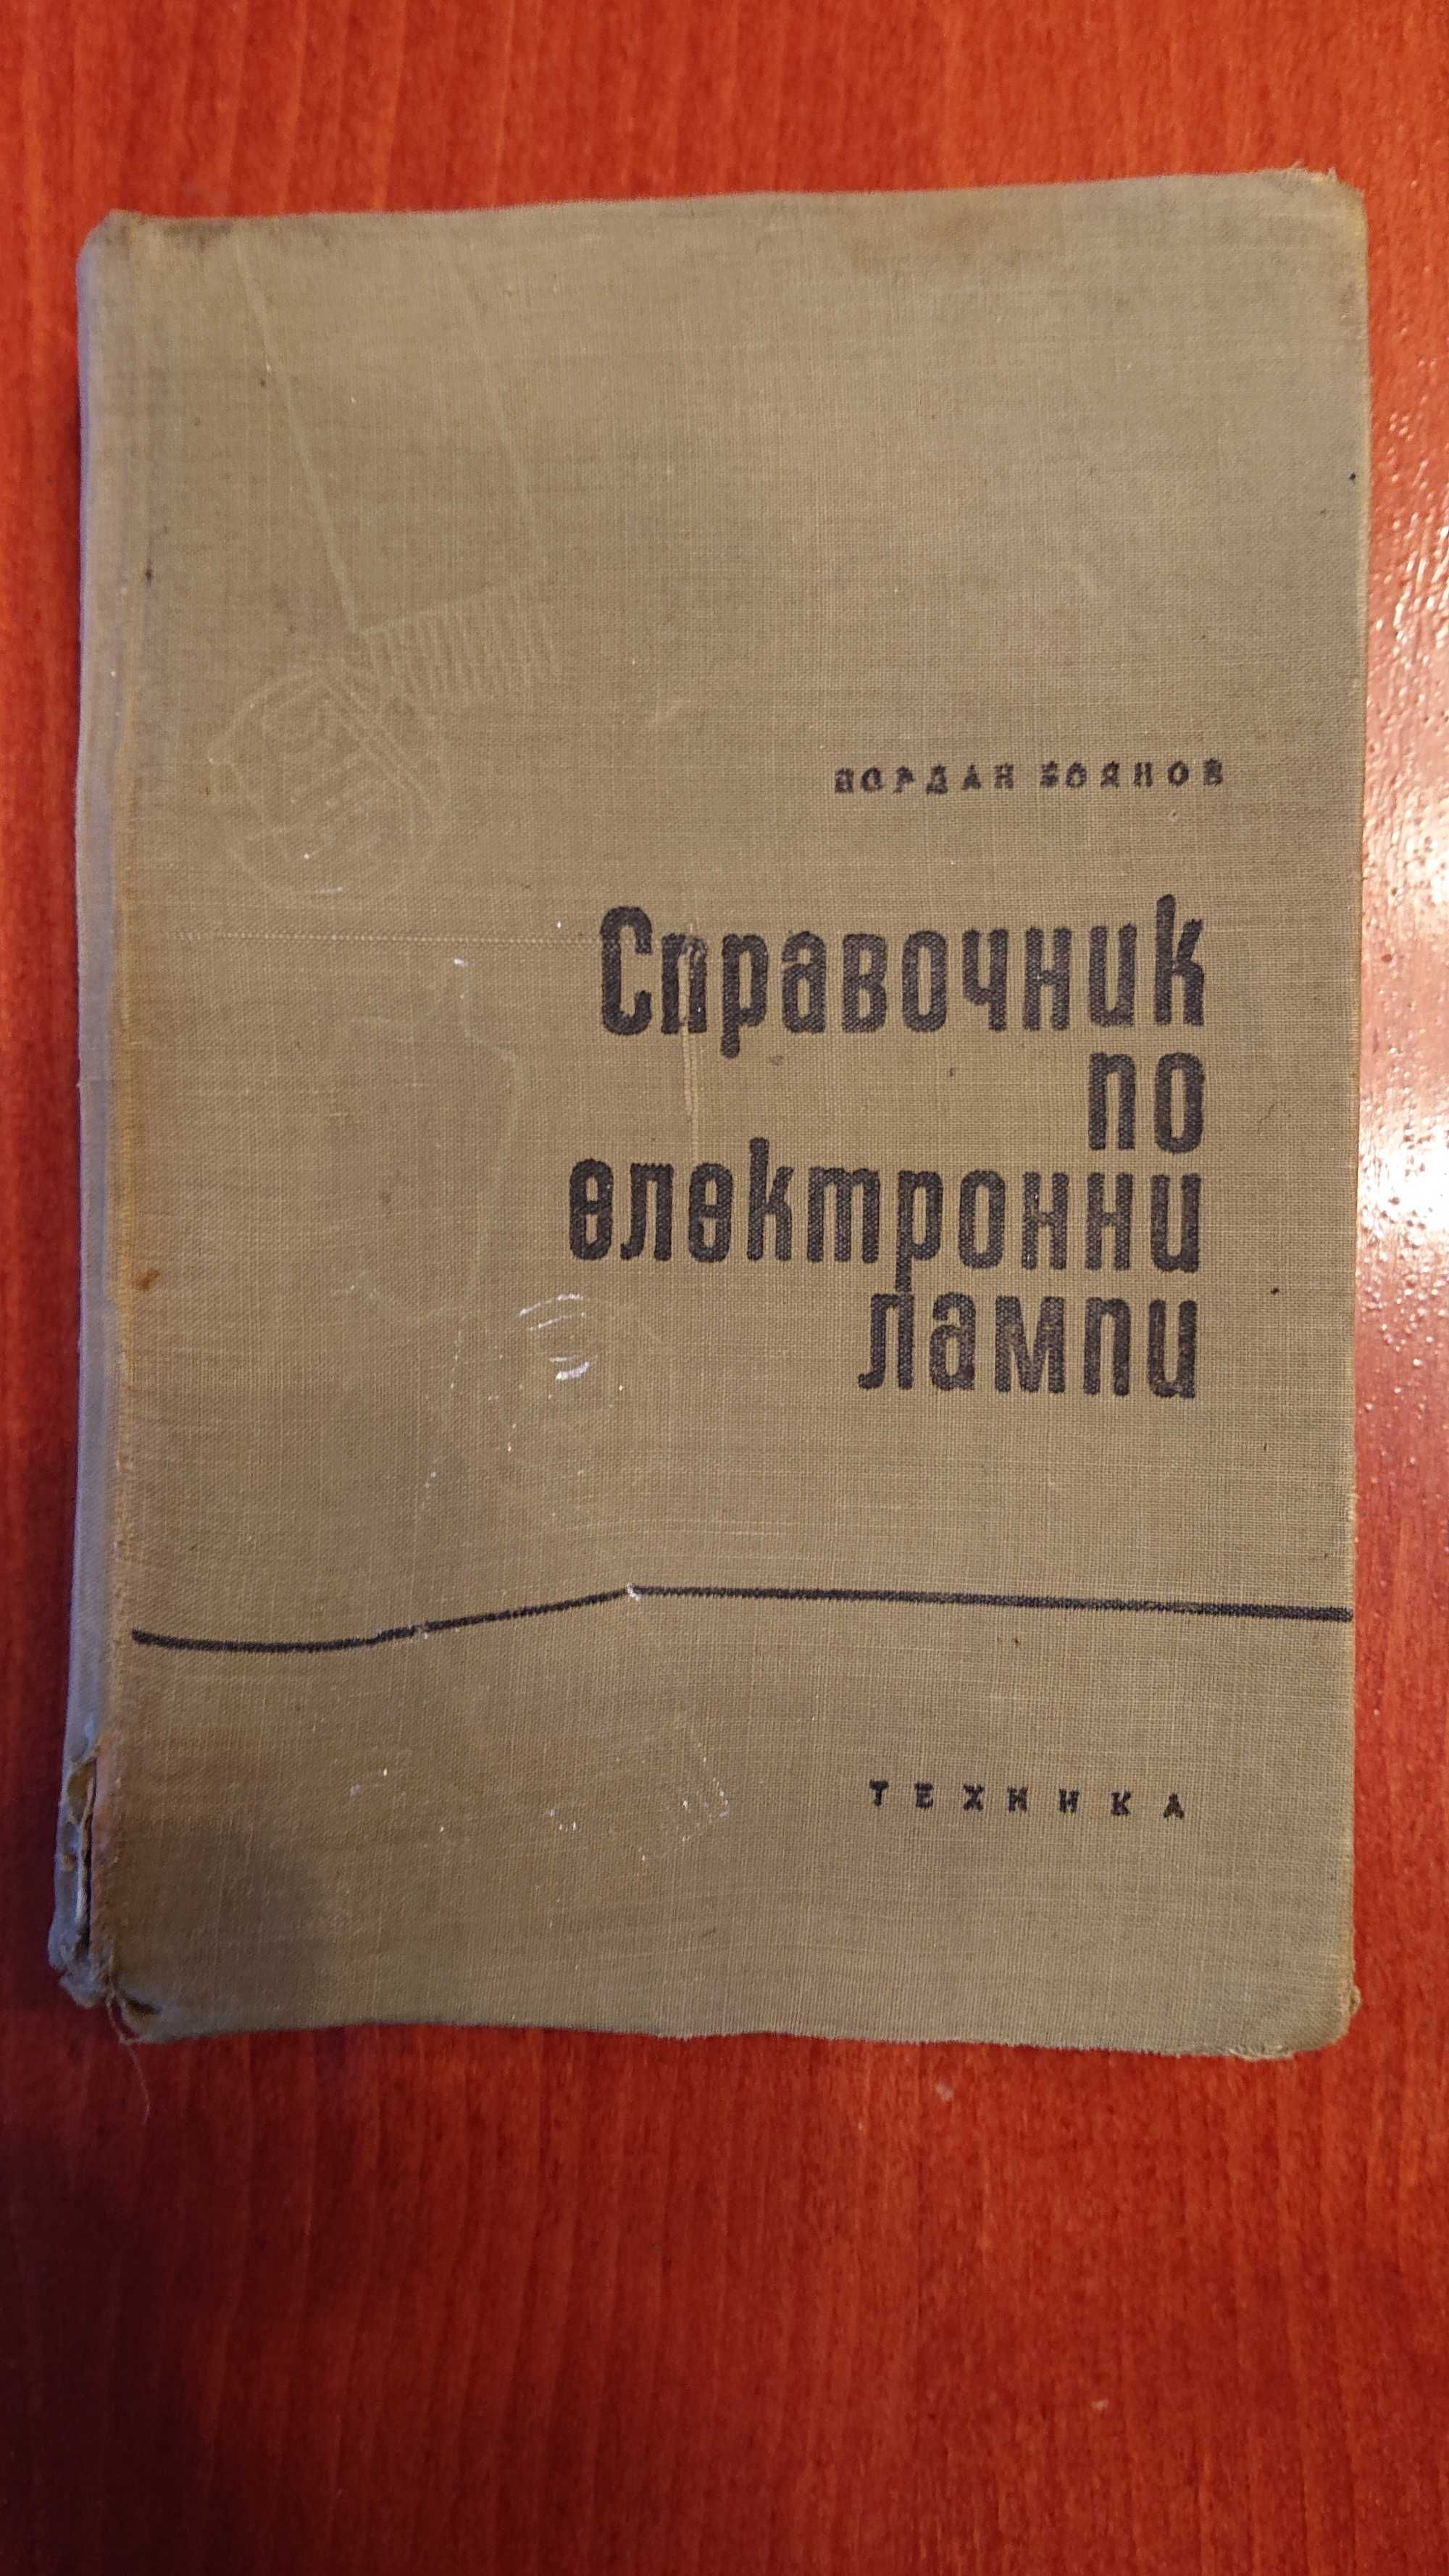 Справочник по електронни лампи автор Йордан Боянов.